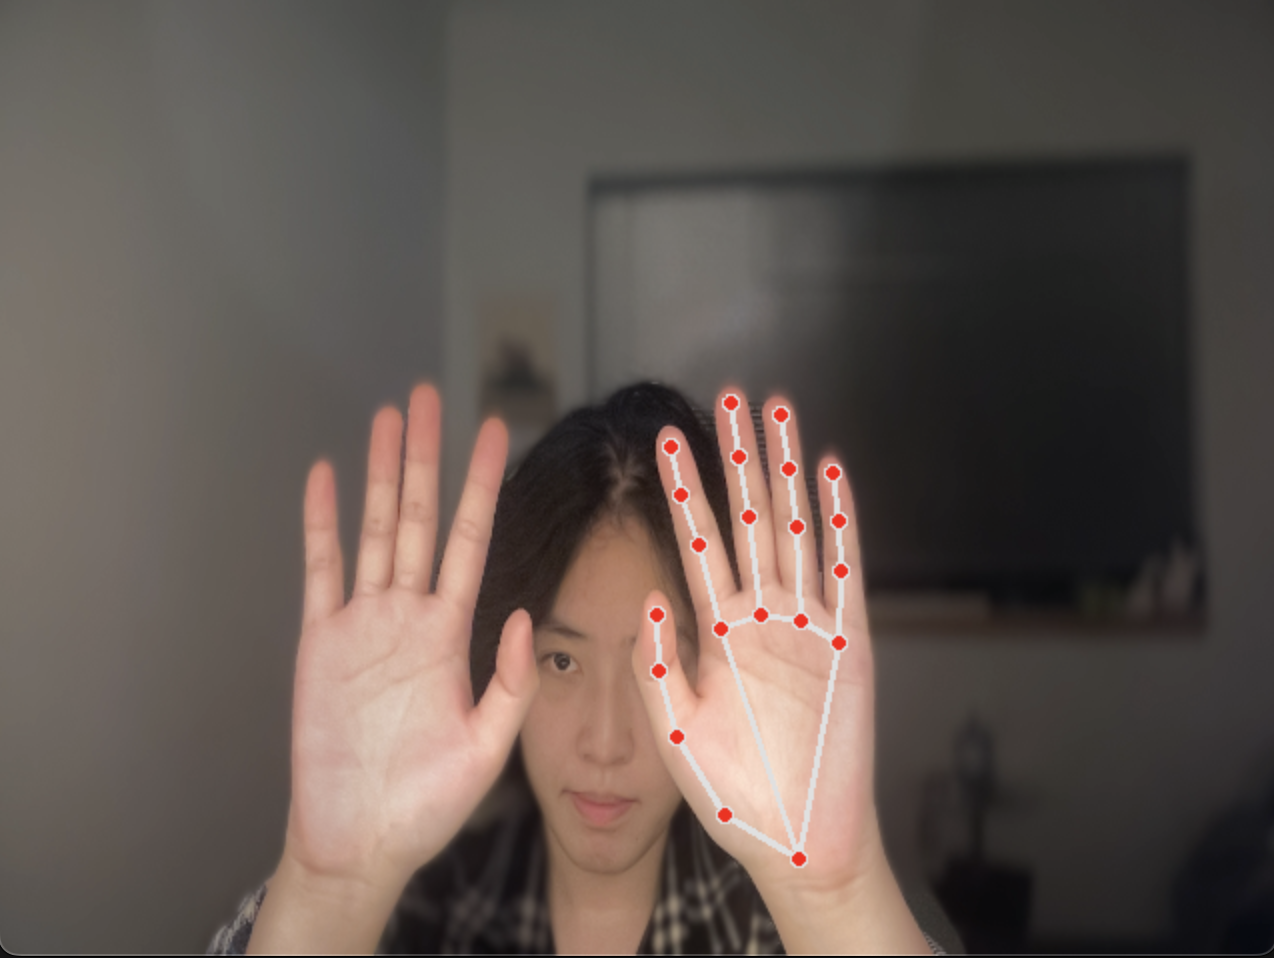 1 hand detection